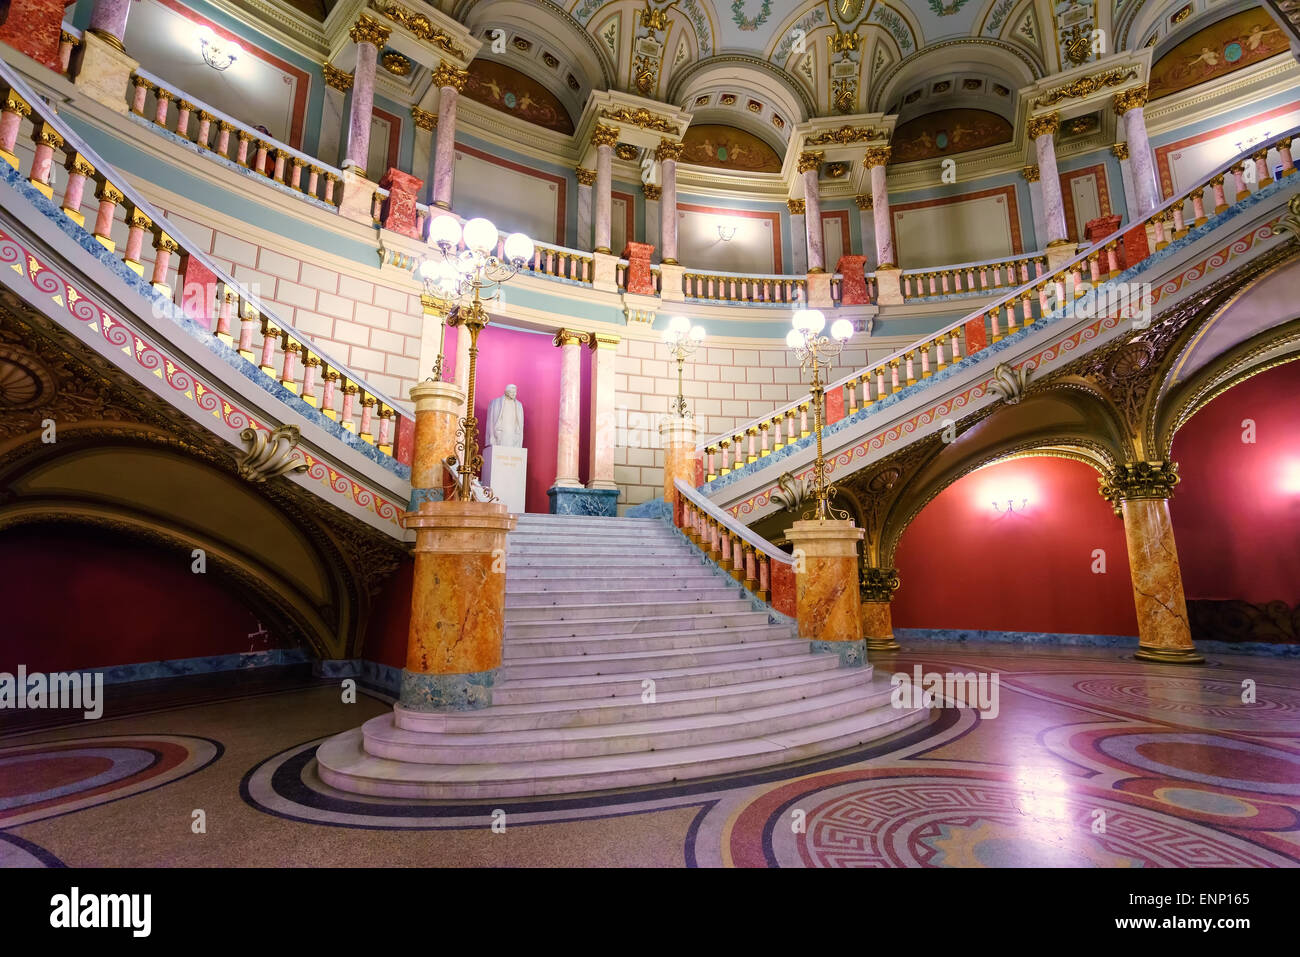 The main staircase in the Romanian Athenaeum (Ateneul Român) concert hall in Bucharest, Romania. Stock Photo